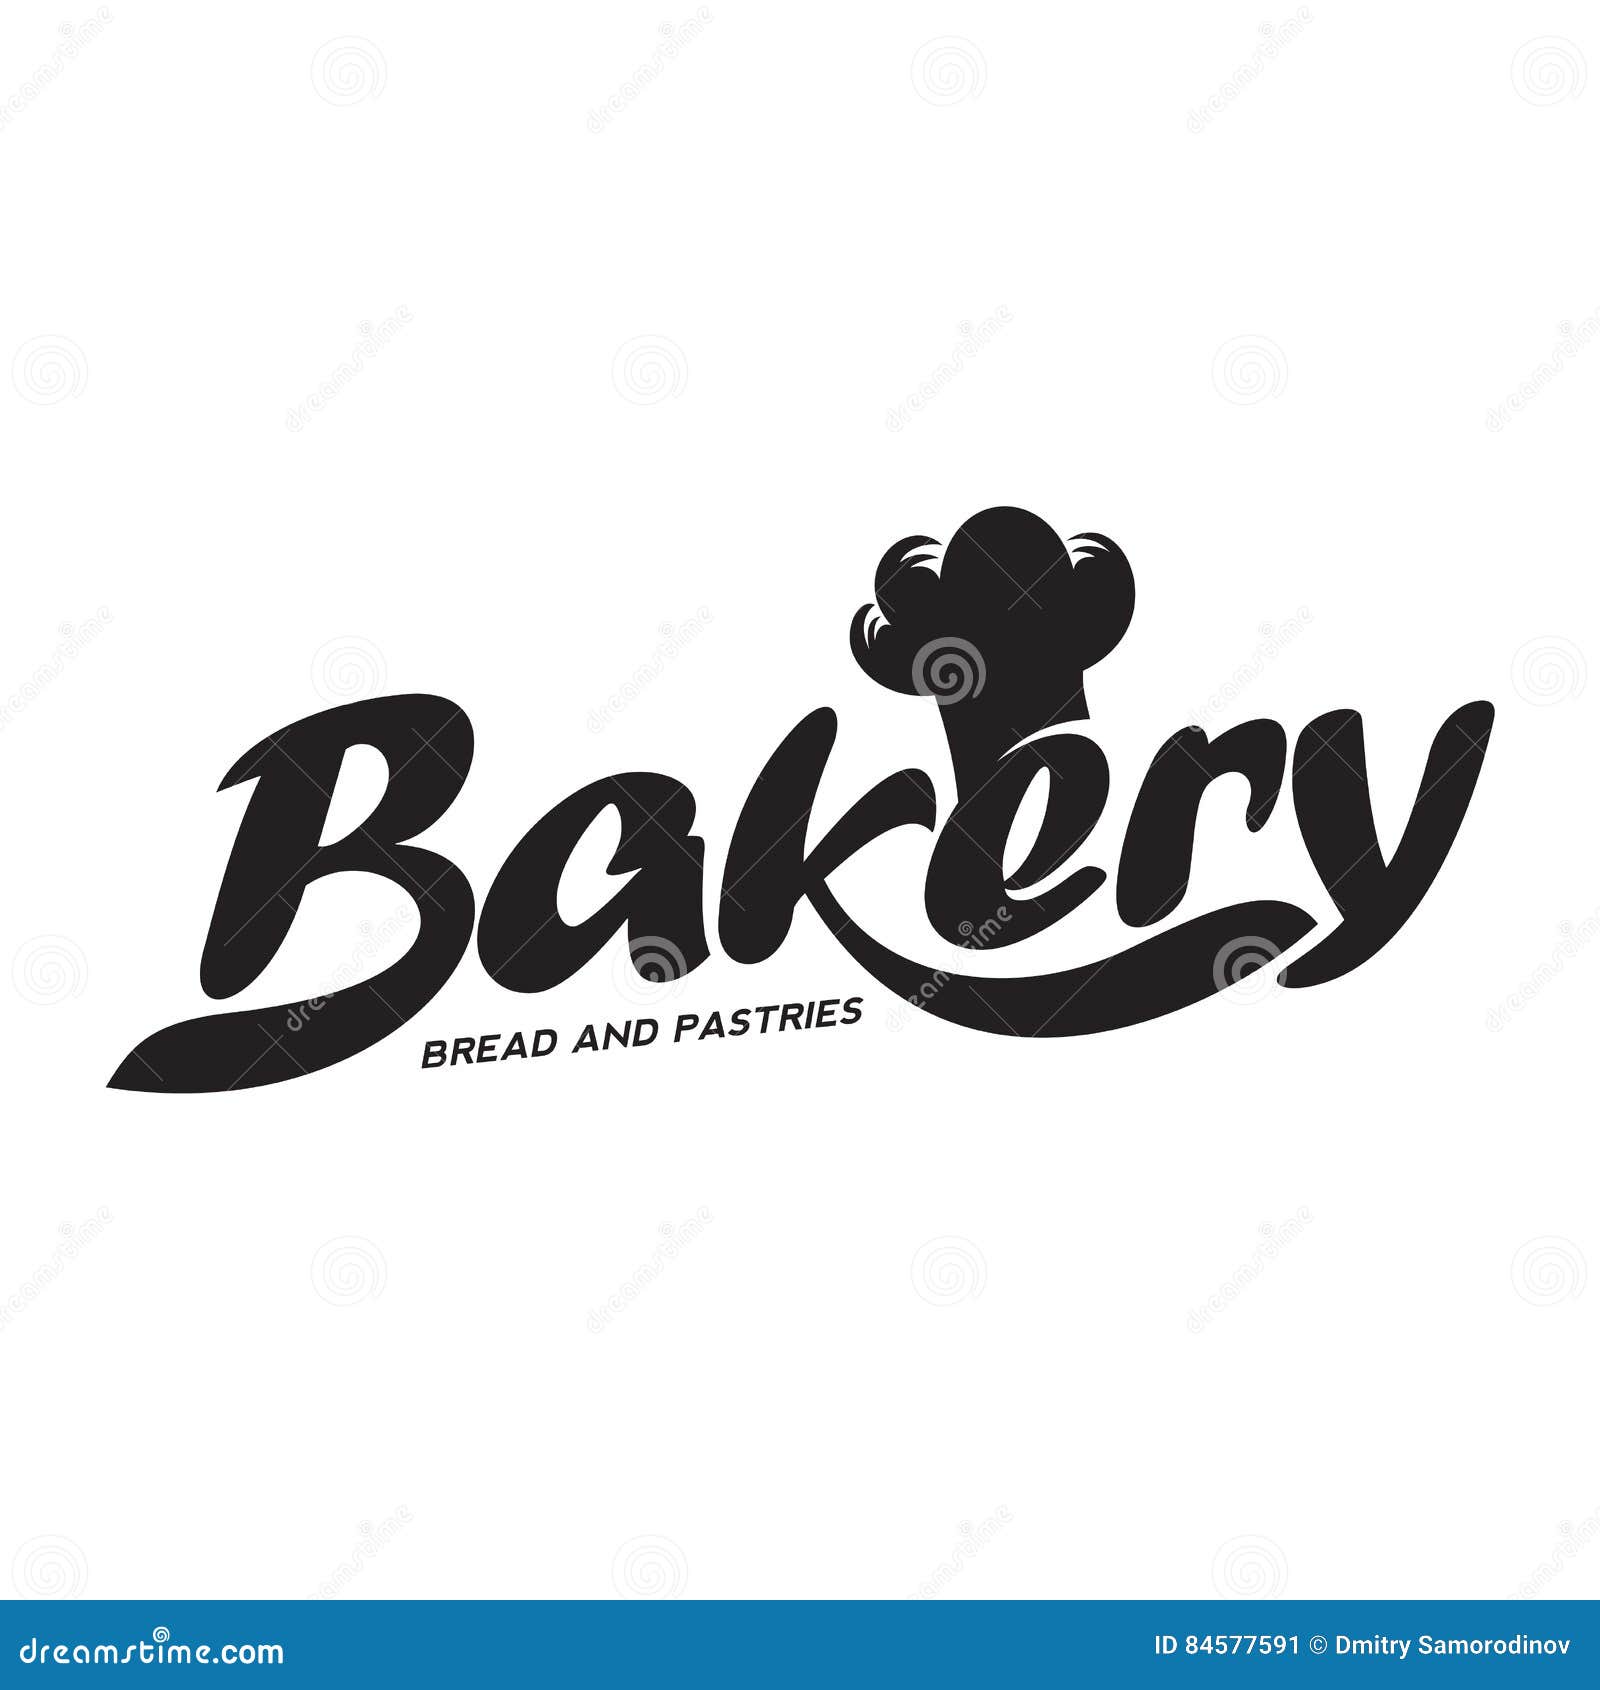 Bakery logo templates stock illustration. Illustration of cook - 84577591